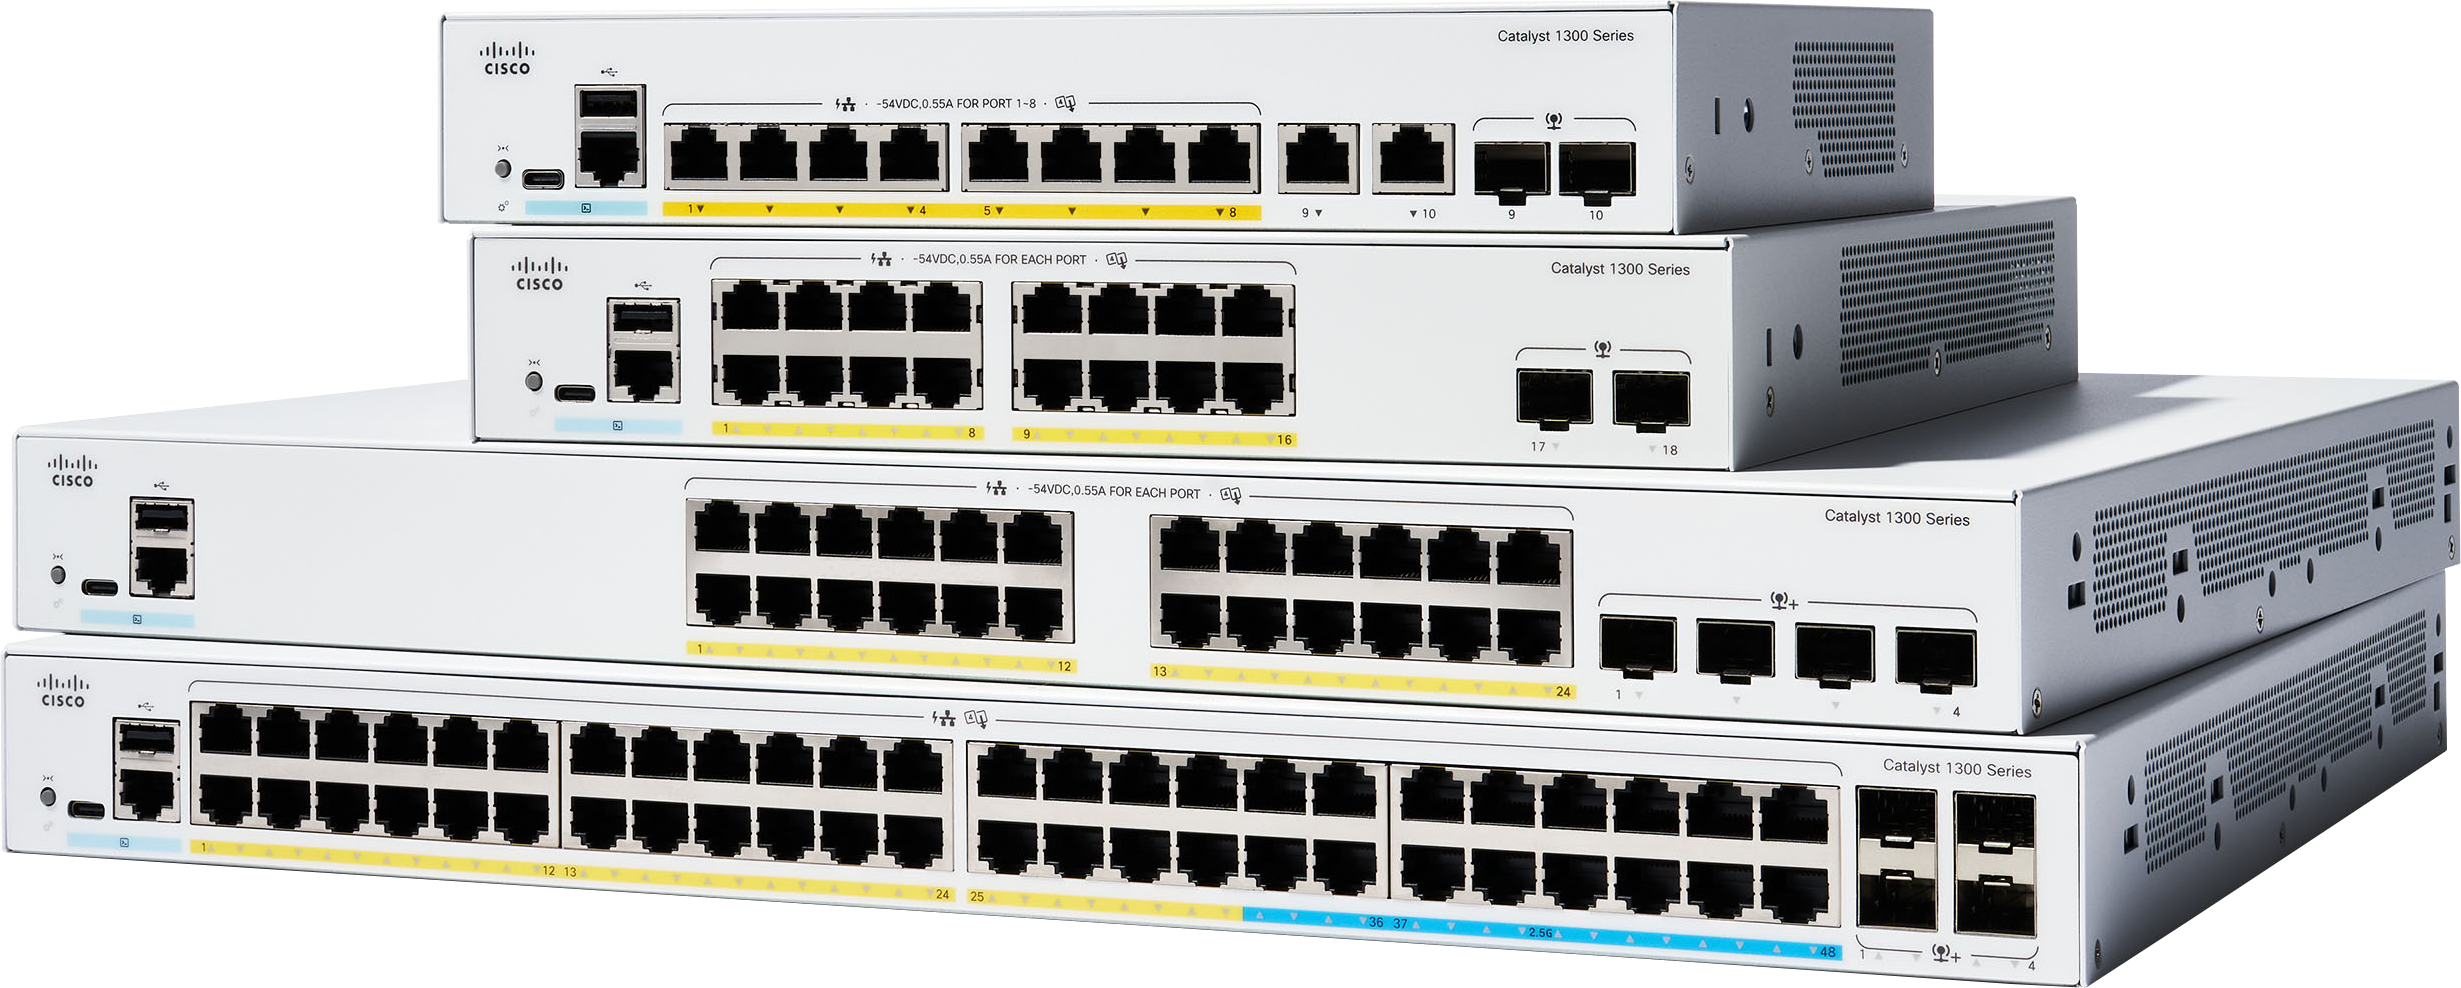 Cisco Catalyst 1300 Series Switches Data Sheet - Cisco